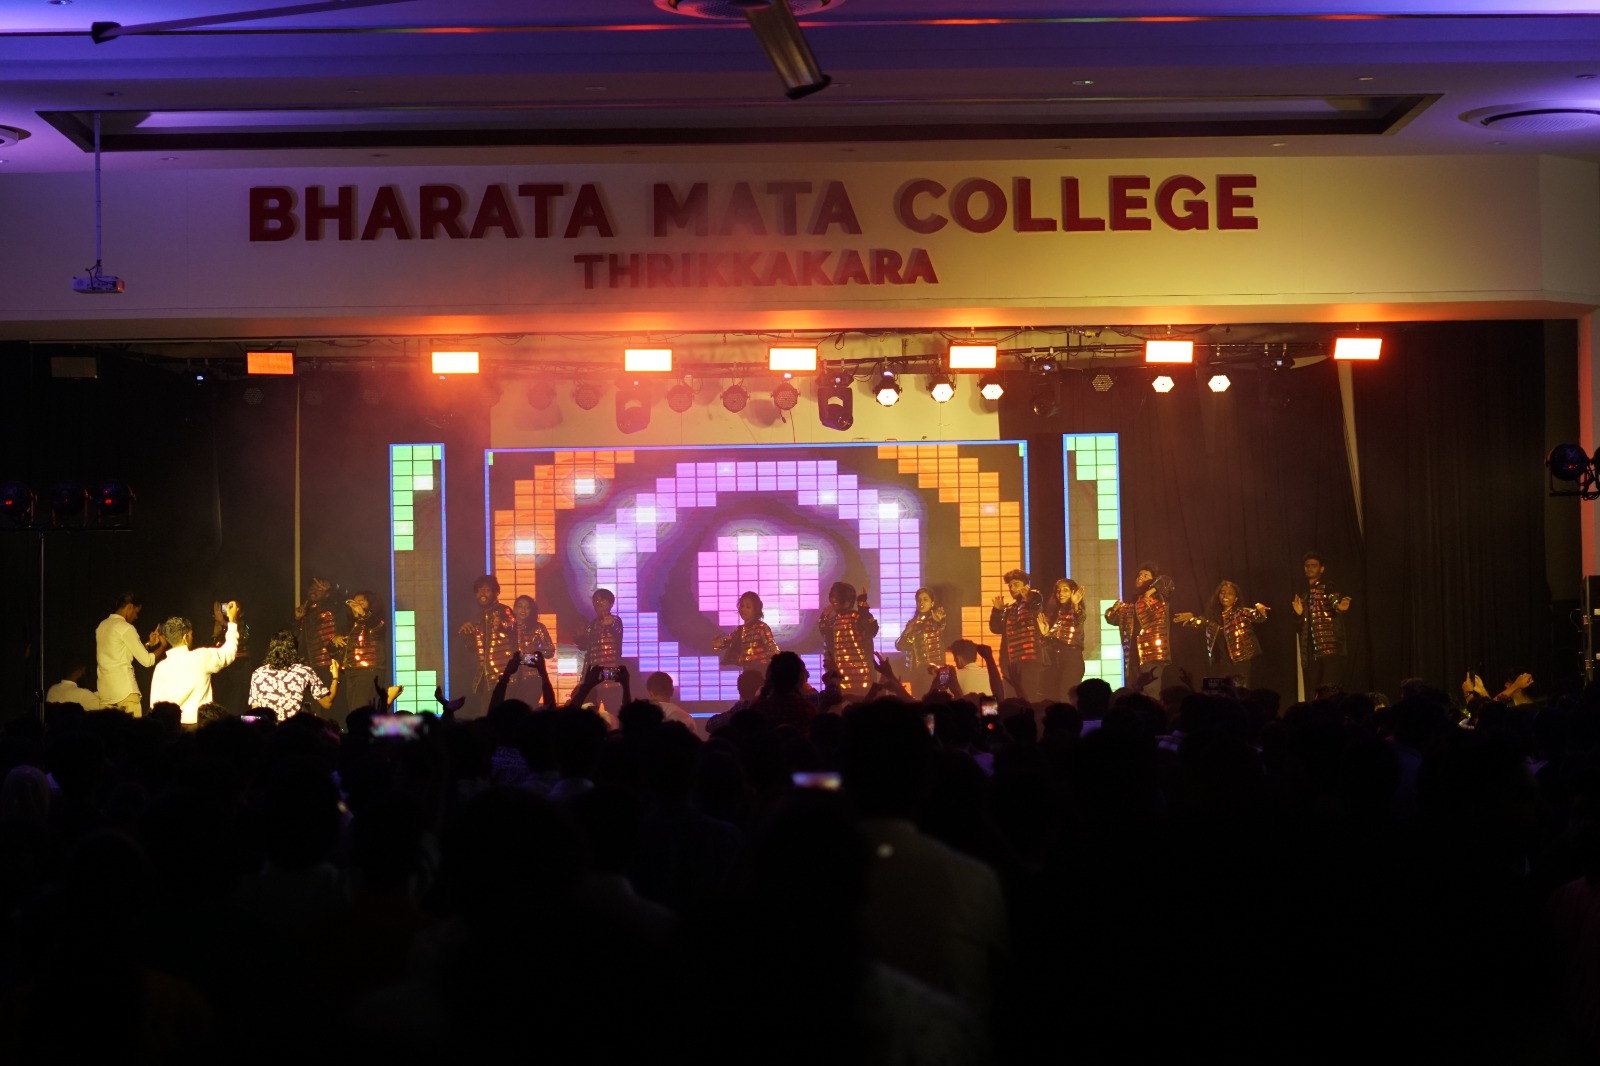 bharata mata college Union Day 2022-23 